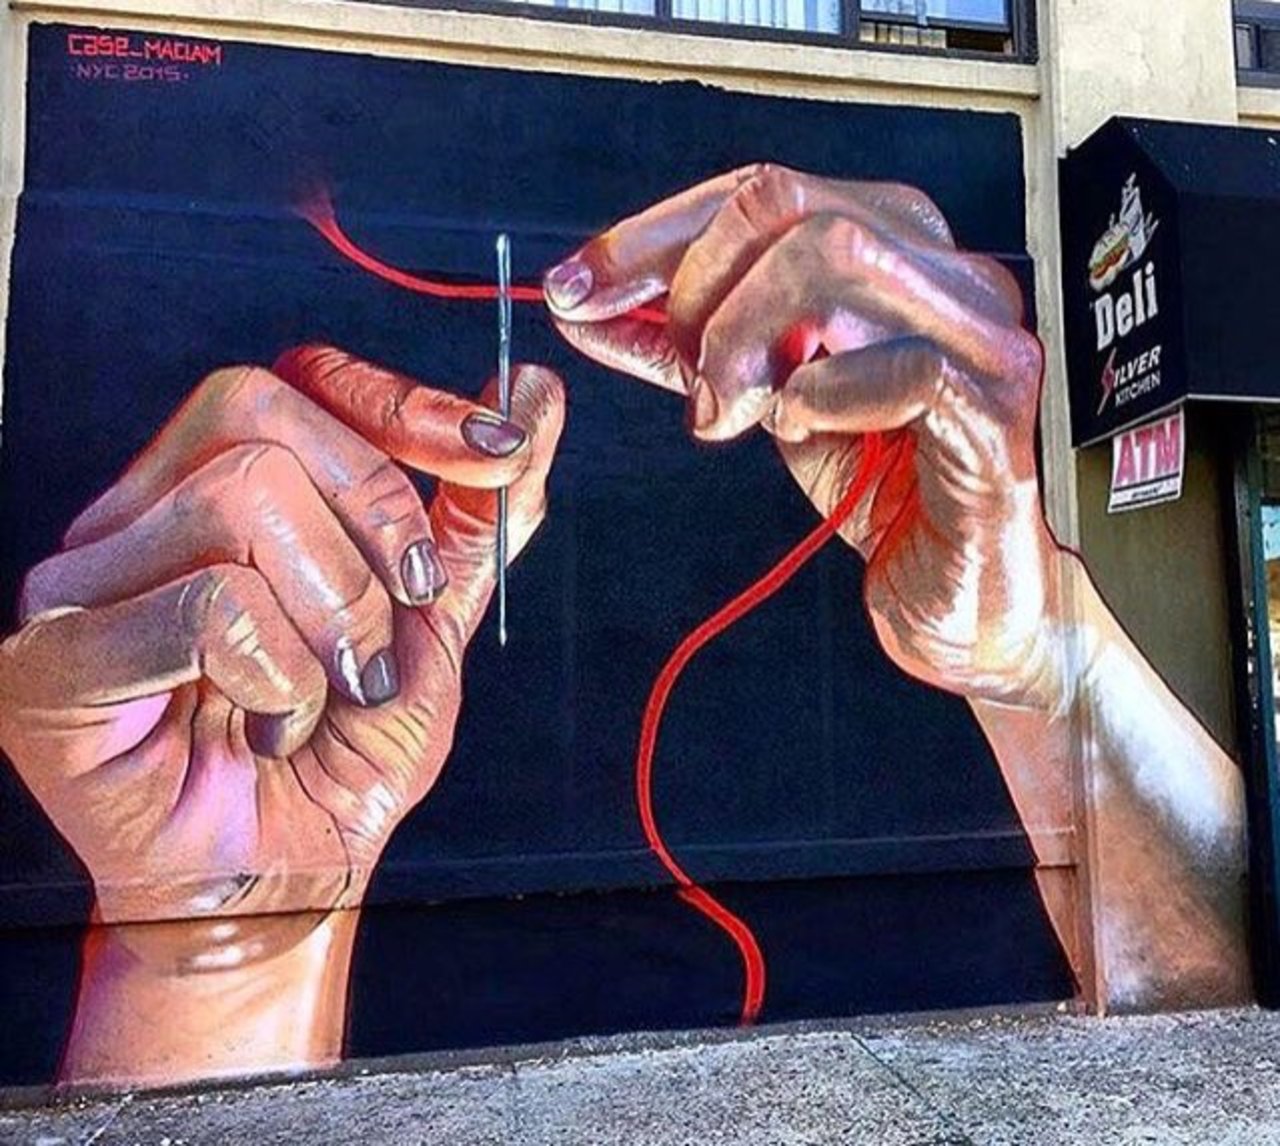 New Street Art by Case Ma'Claim in NYC 

#art #graffiti #mural #streetart https://t.co/xCBNcYDutf